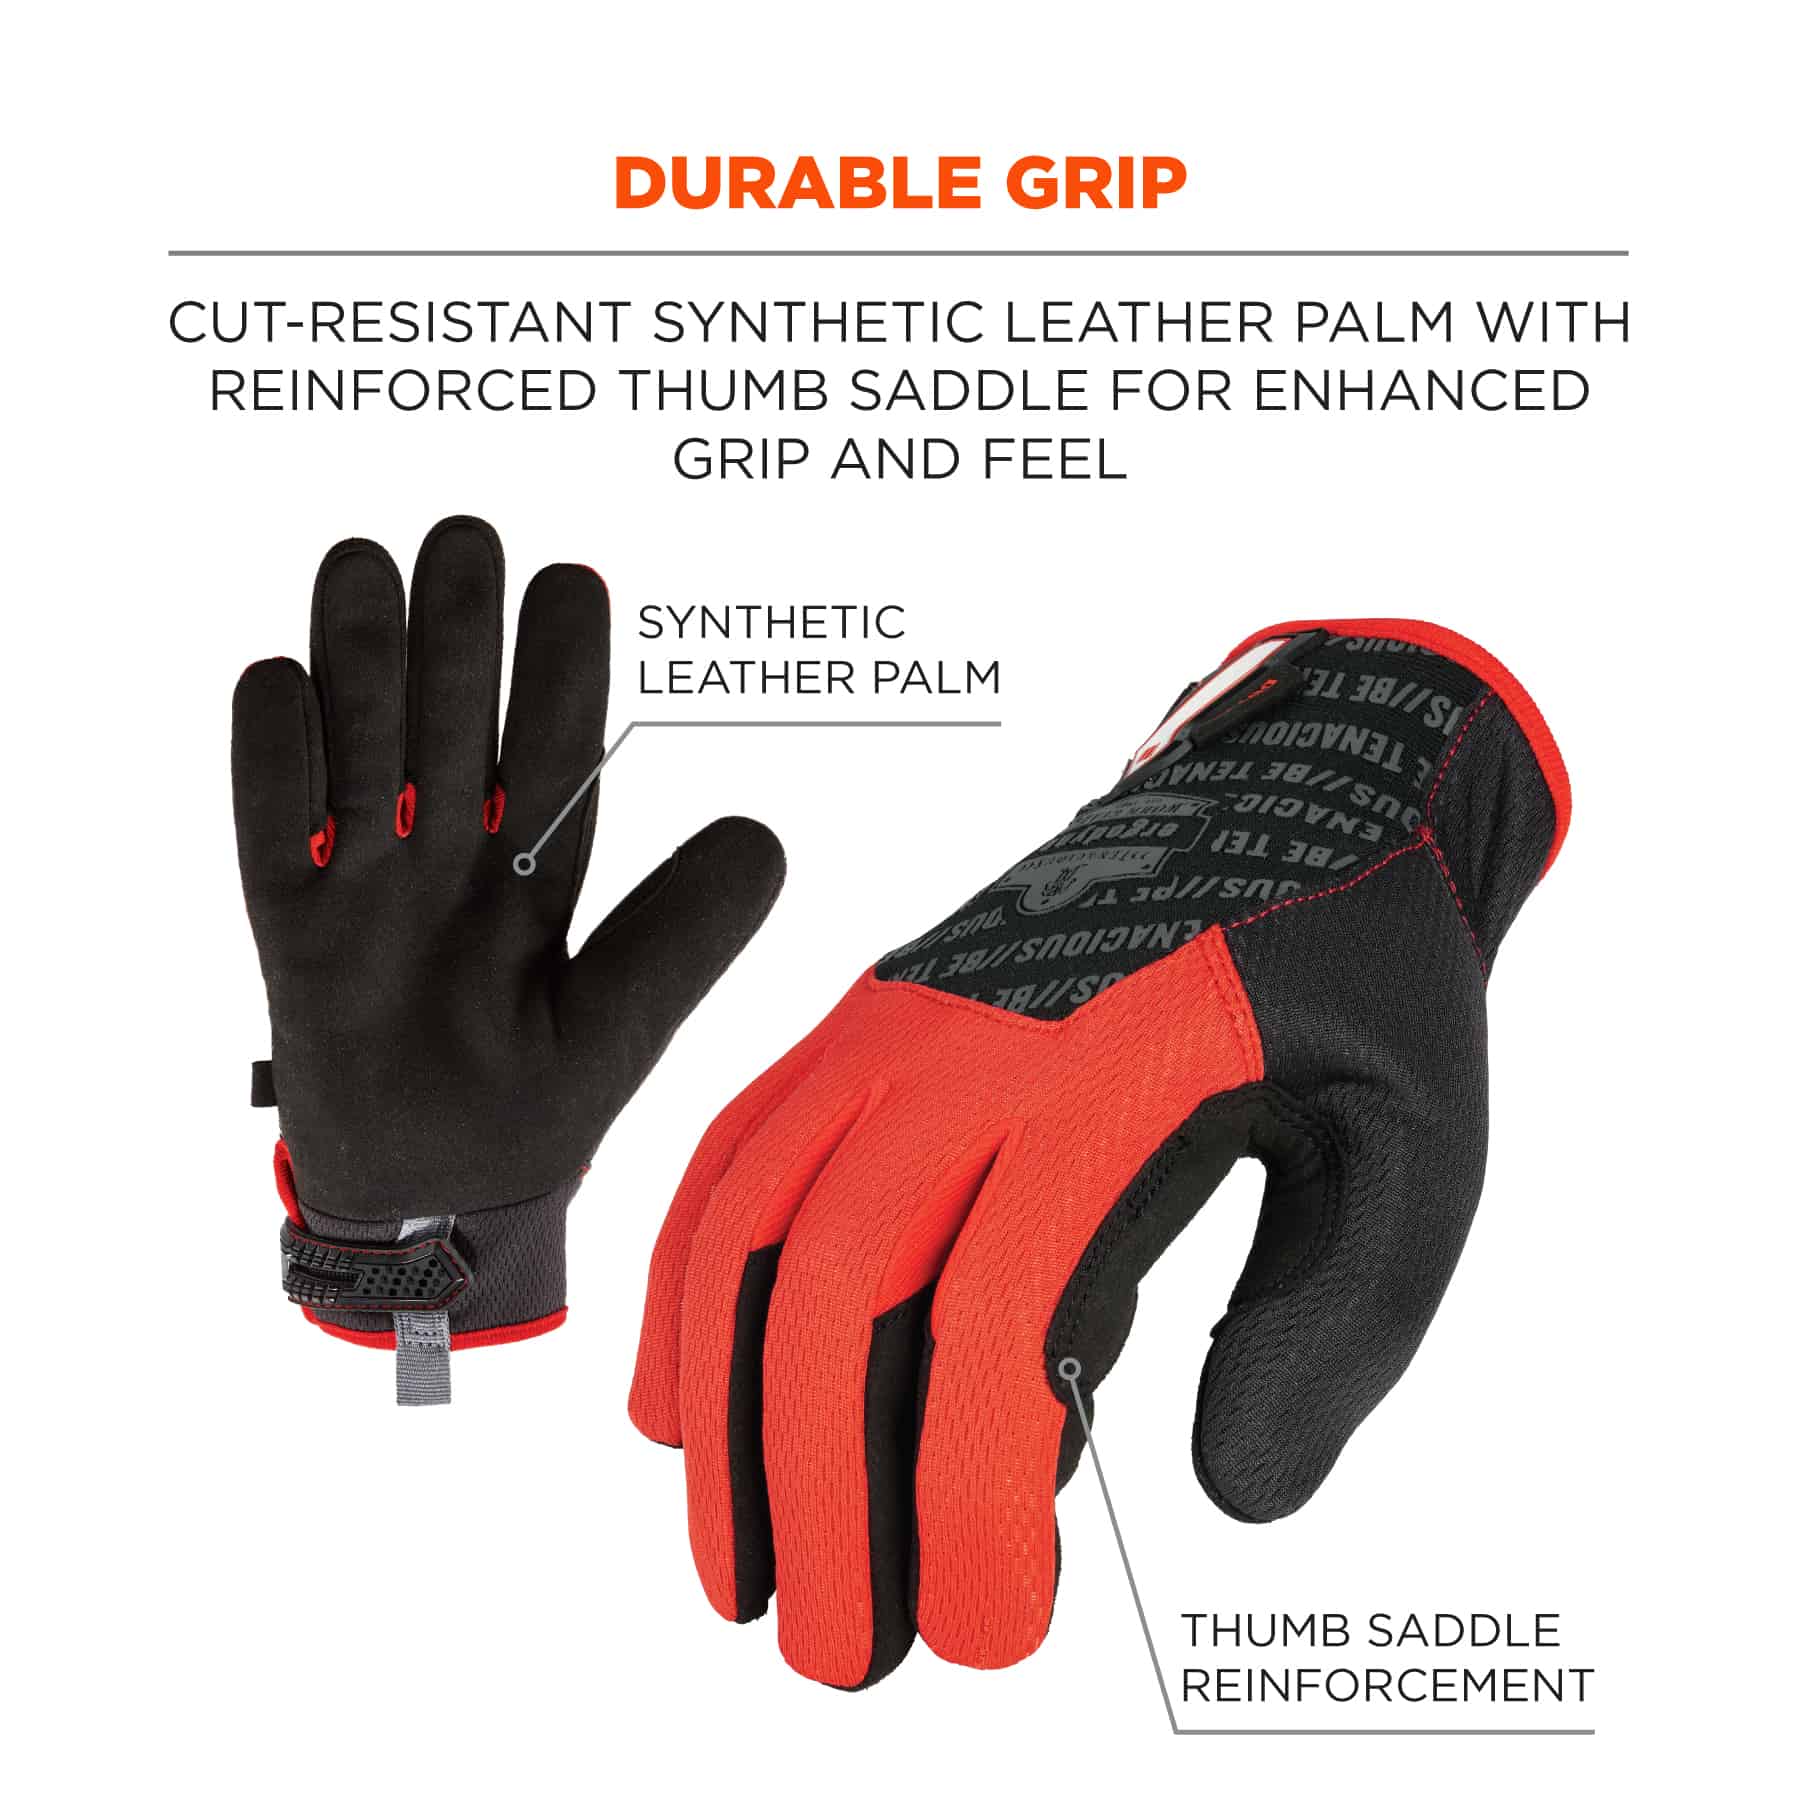 https://www.ergodyne.com/sites/default/files/product-images/17922-812cr6-utility-cut-resistance-gloves-durable-grip.jpg